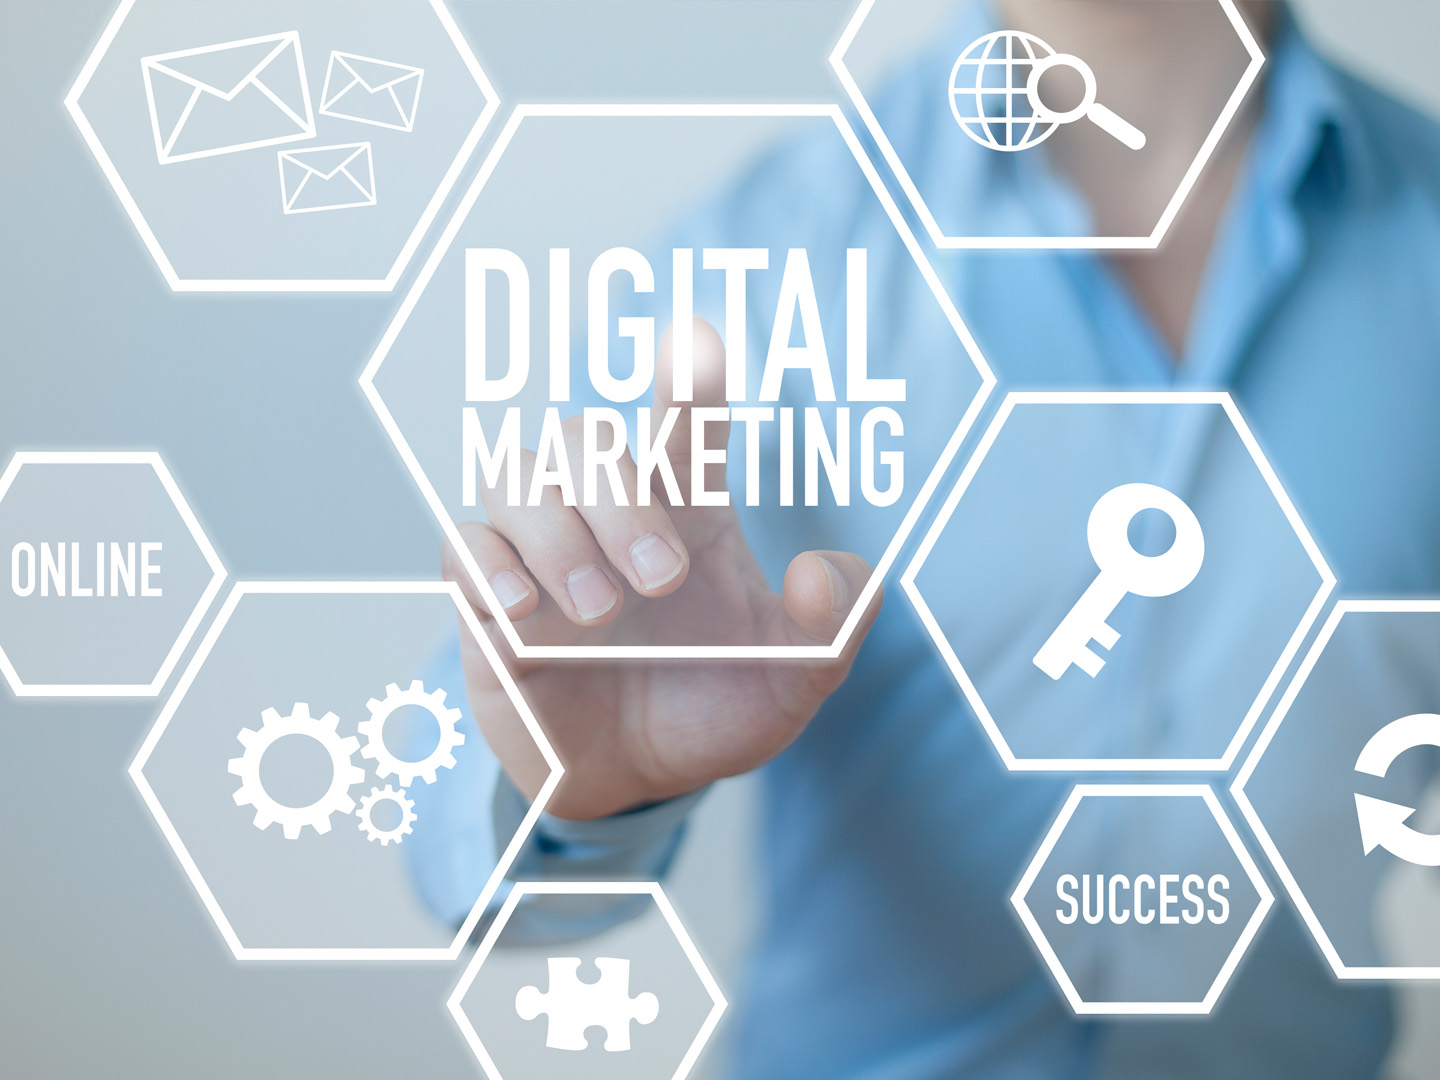 Why Choose a Career in Digital Marketing?